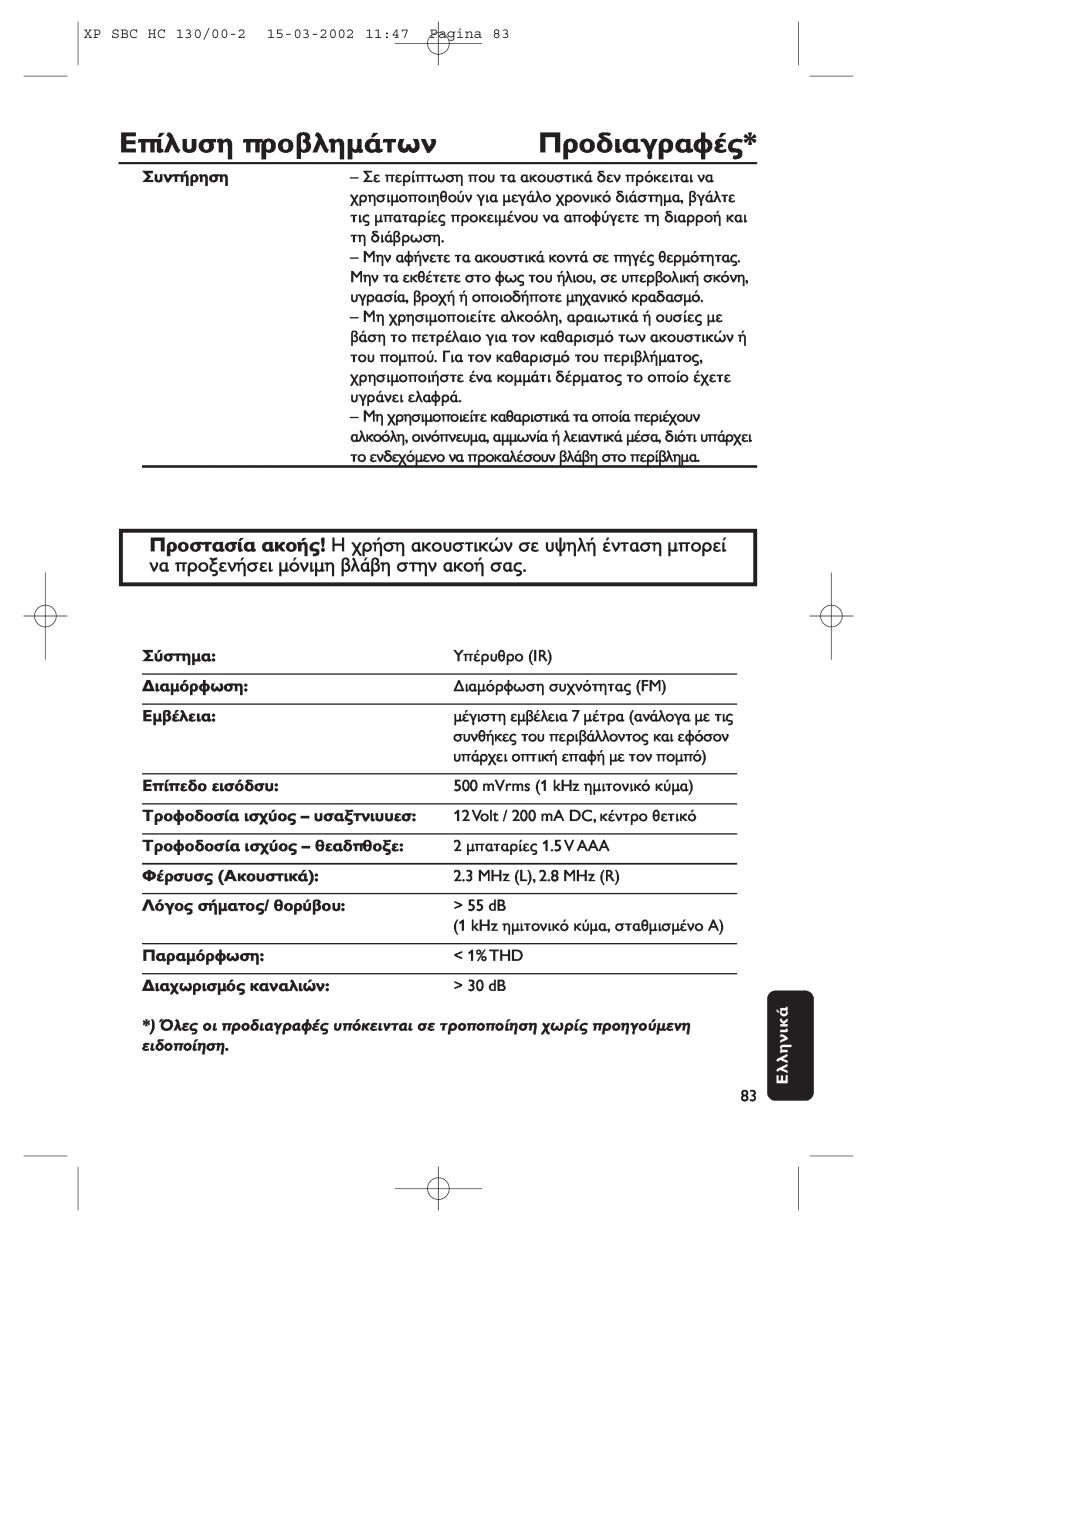 Philips SBC HC130 manual Shone, XP SBC HC 130/00-2 15-03-200211 47 Pagina 